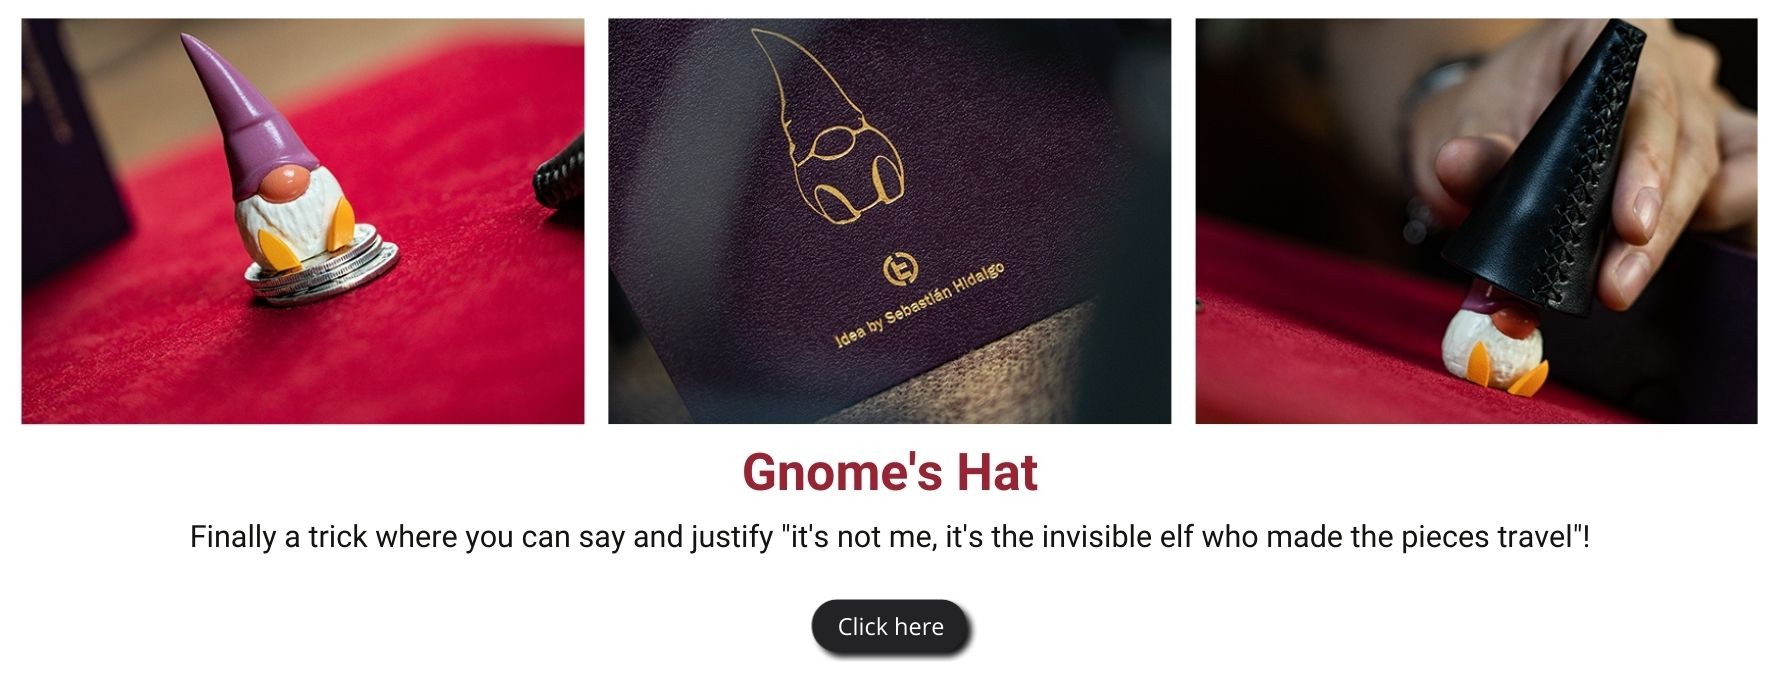 Gnome's hat